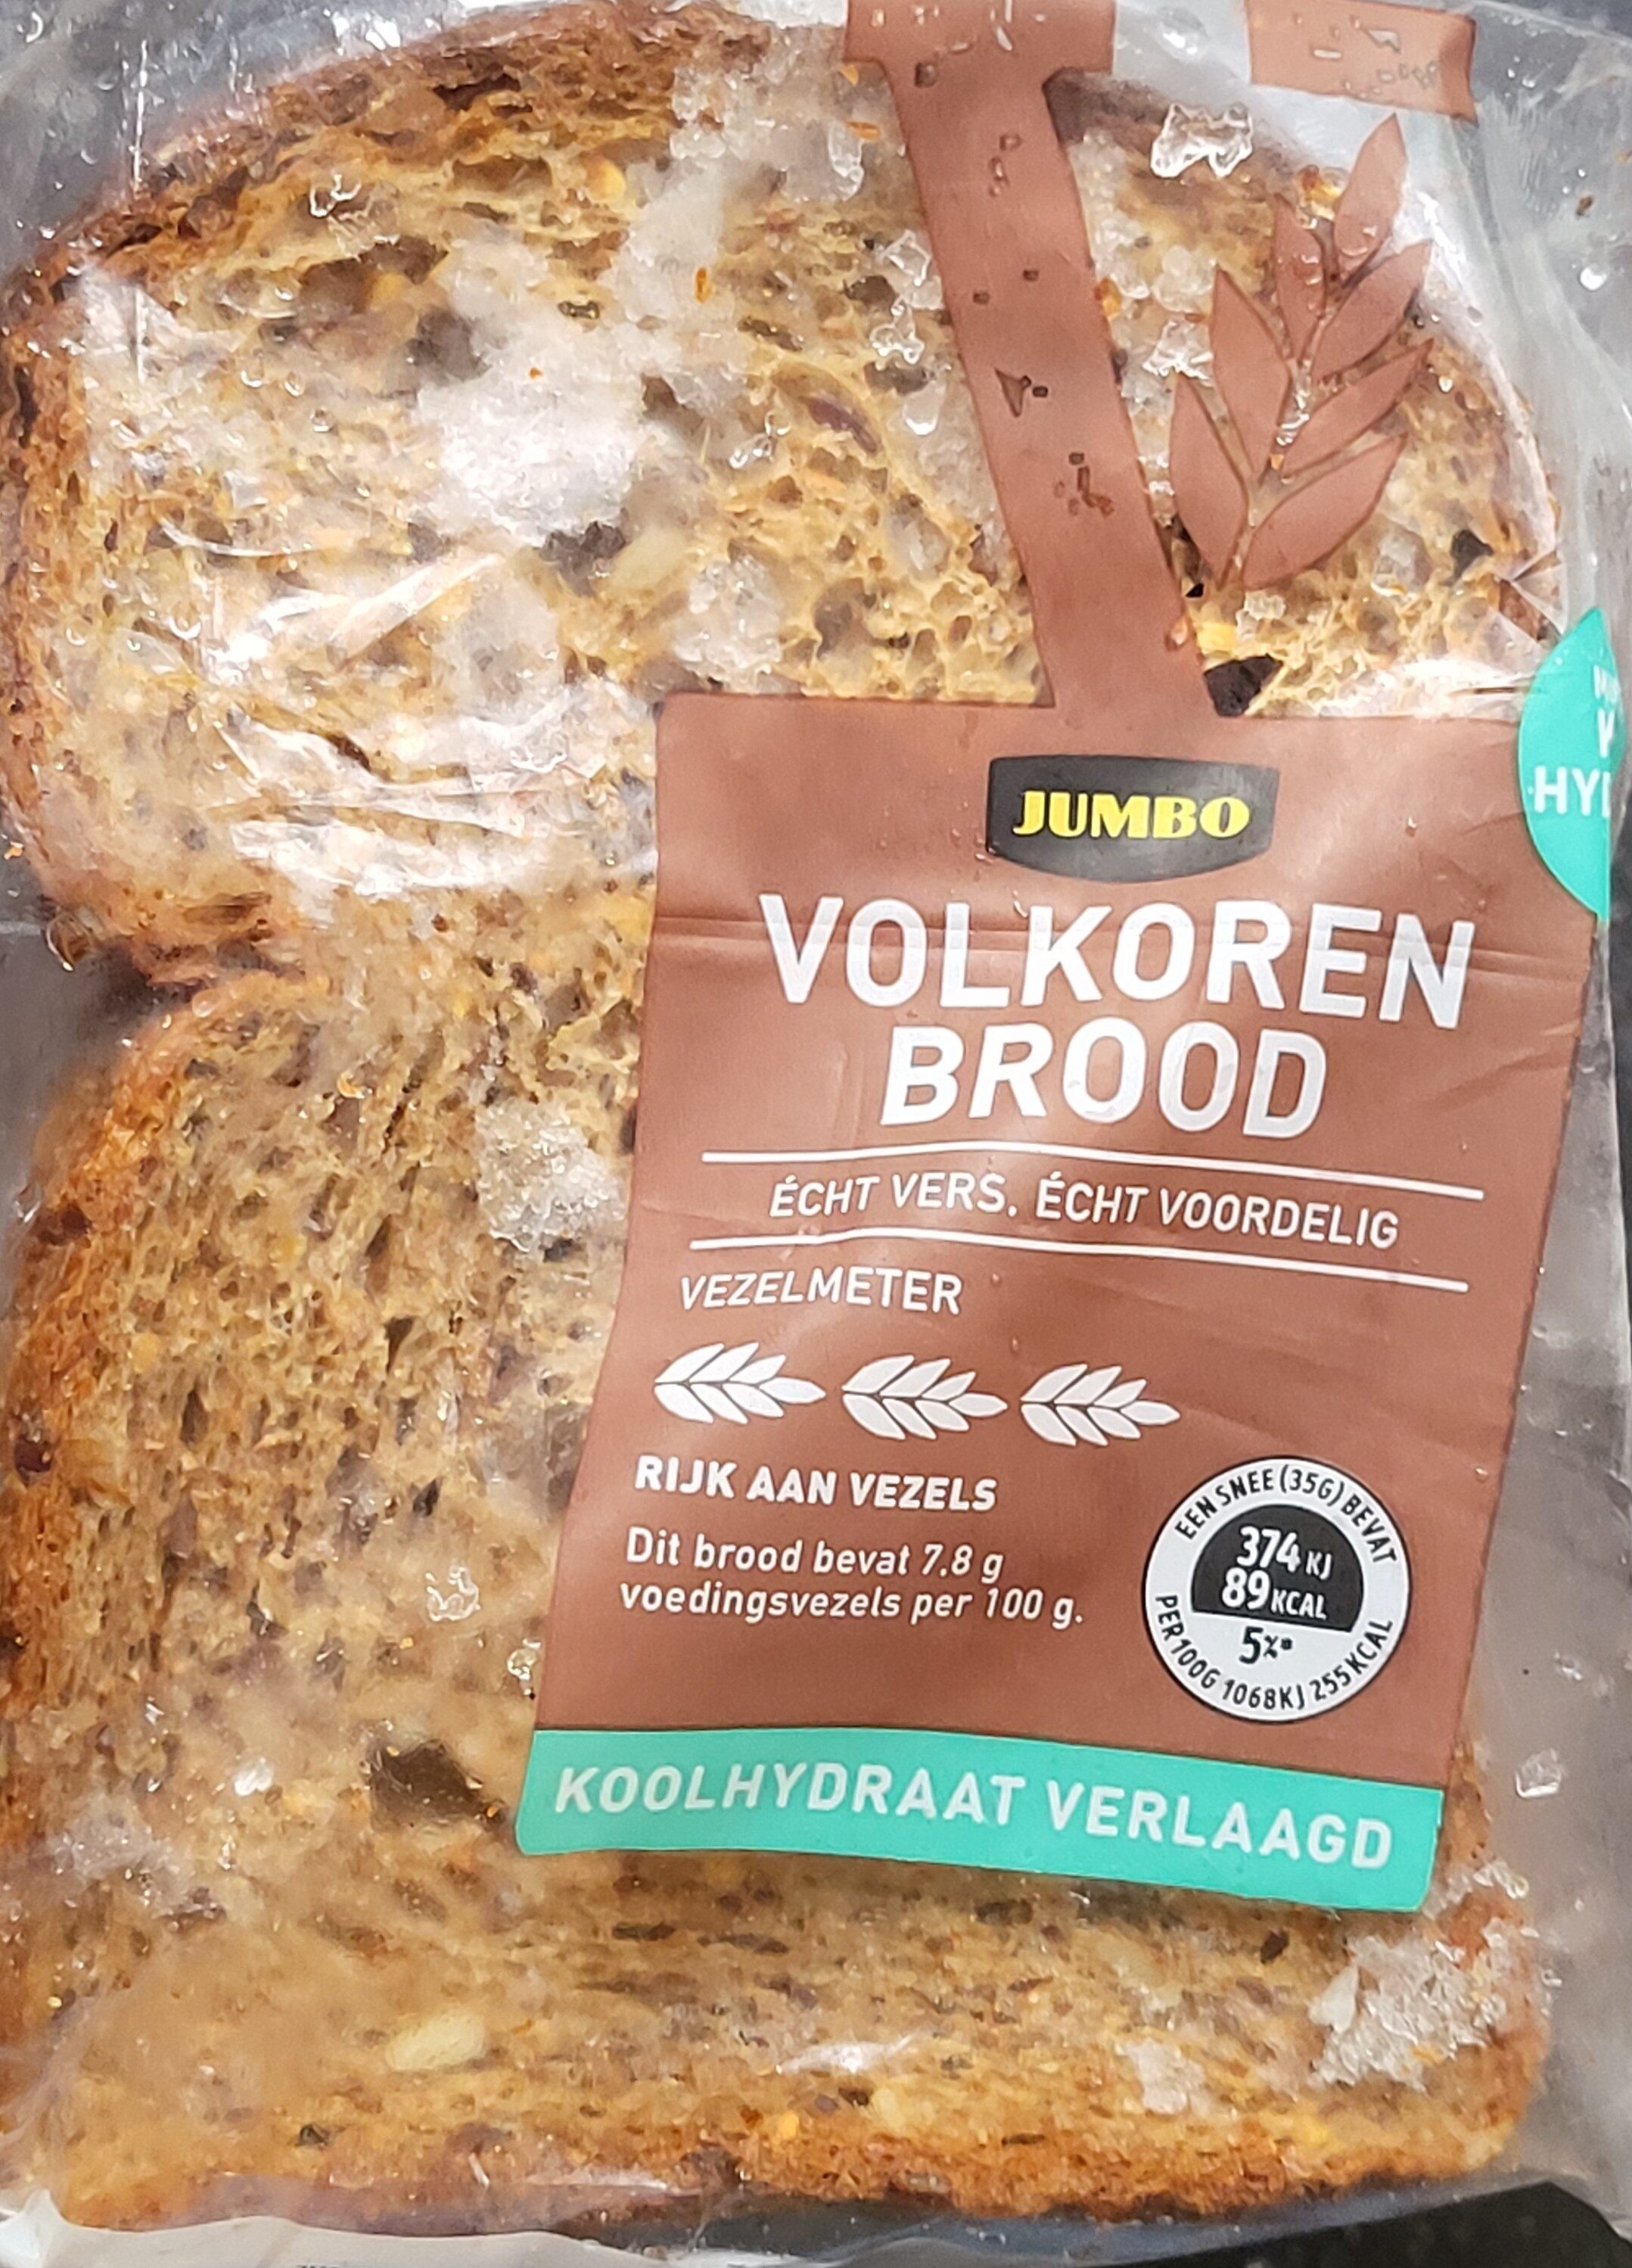 Volkoren brood koolhydraat verlaagd - Product